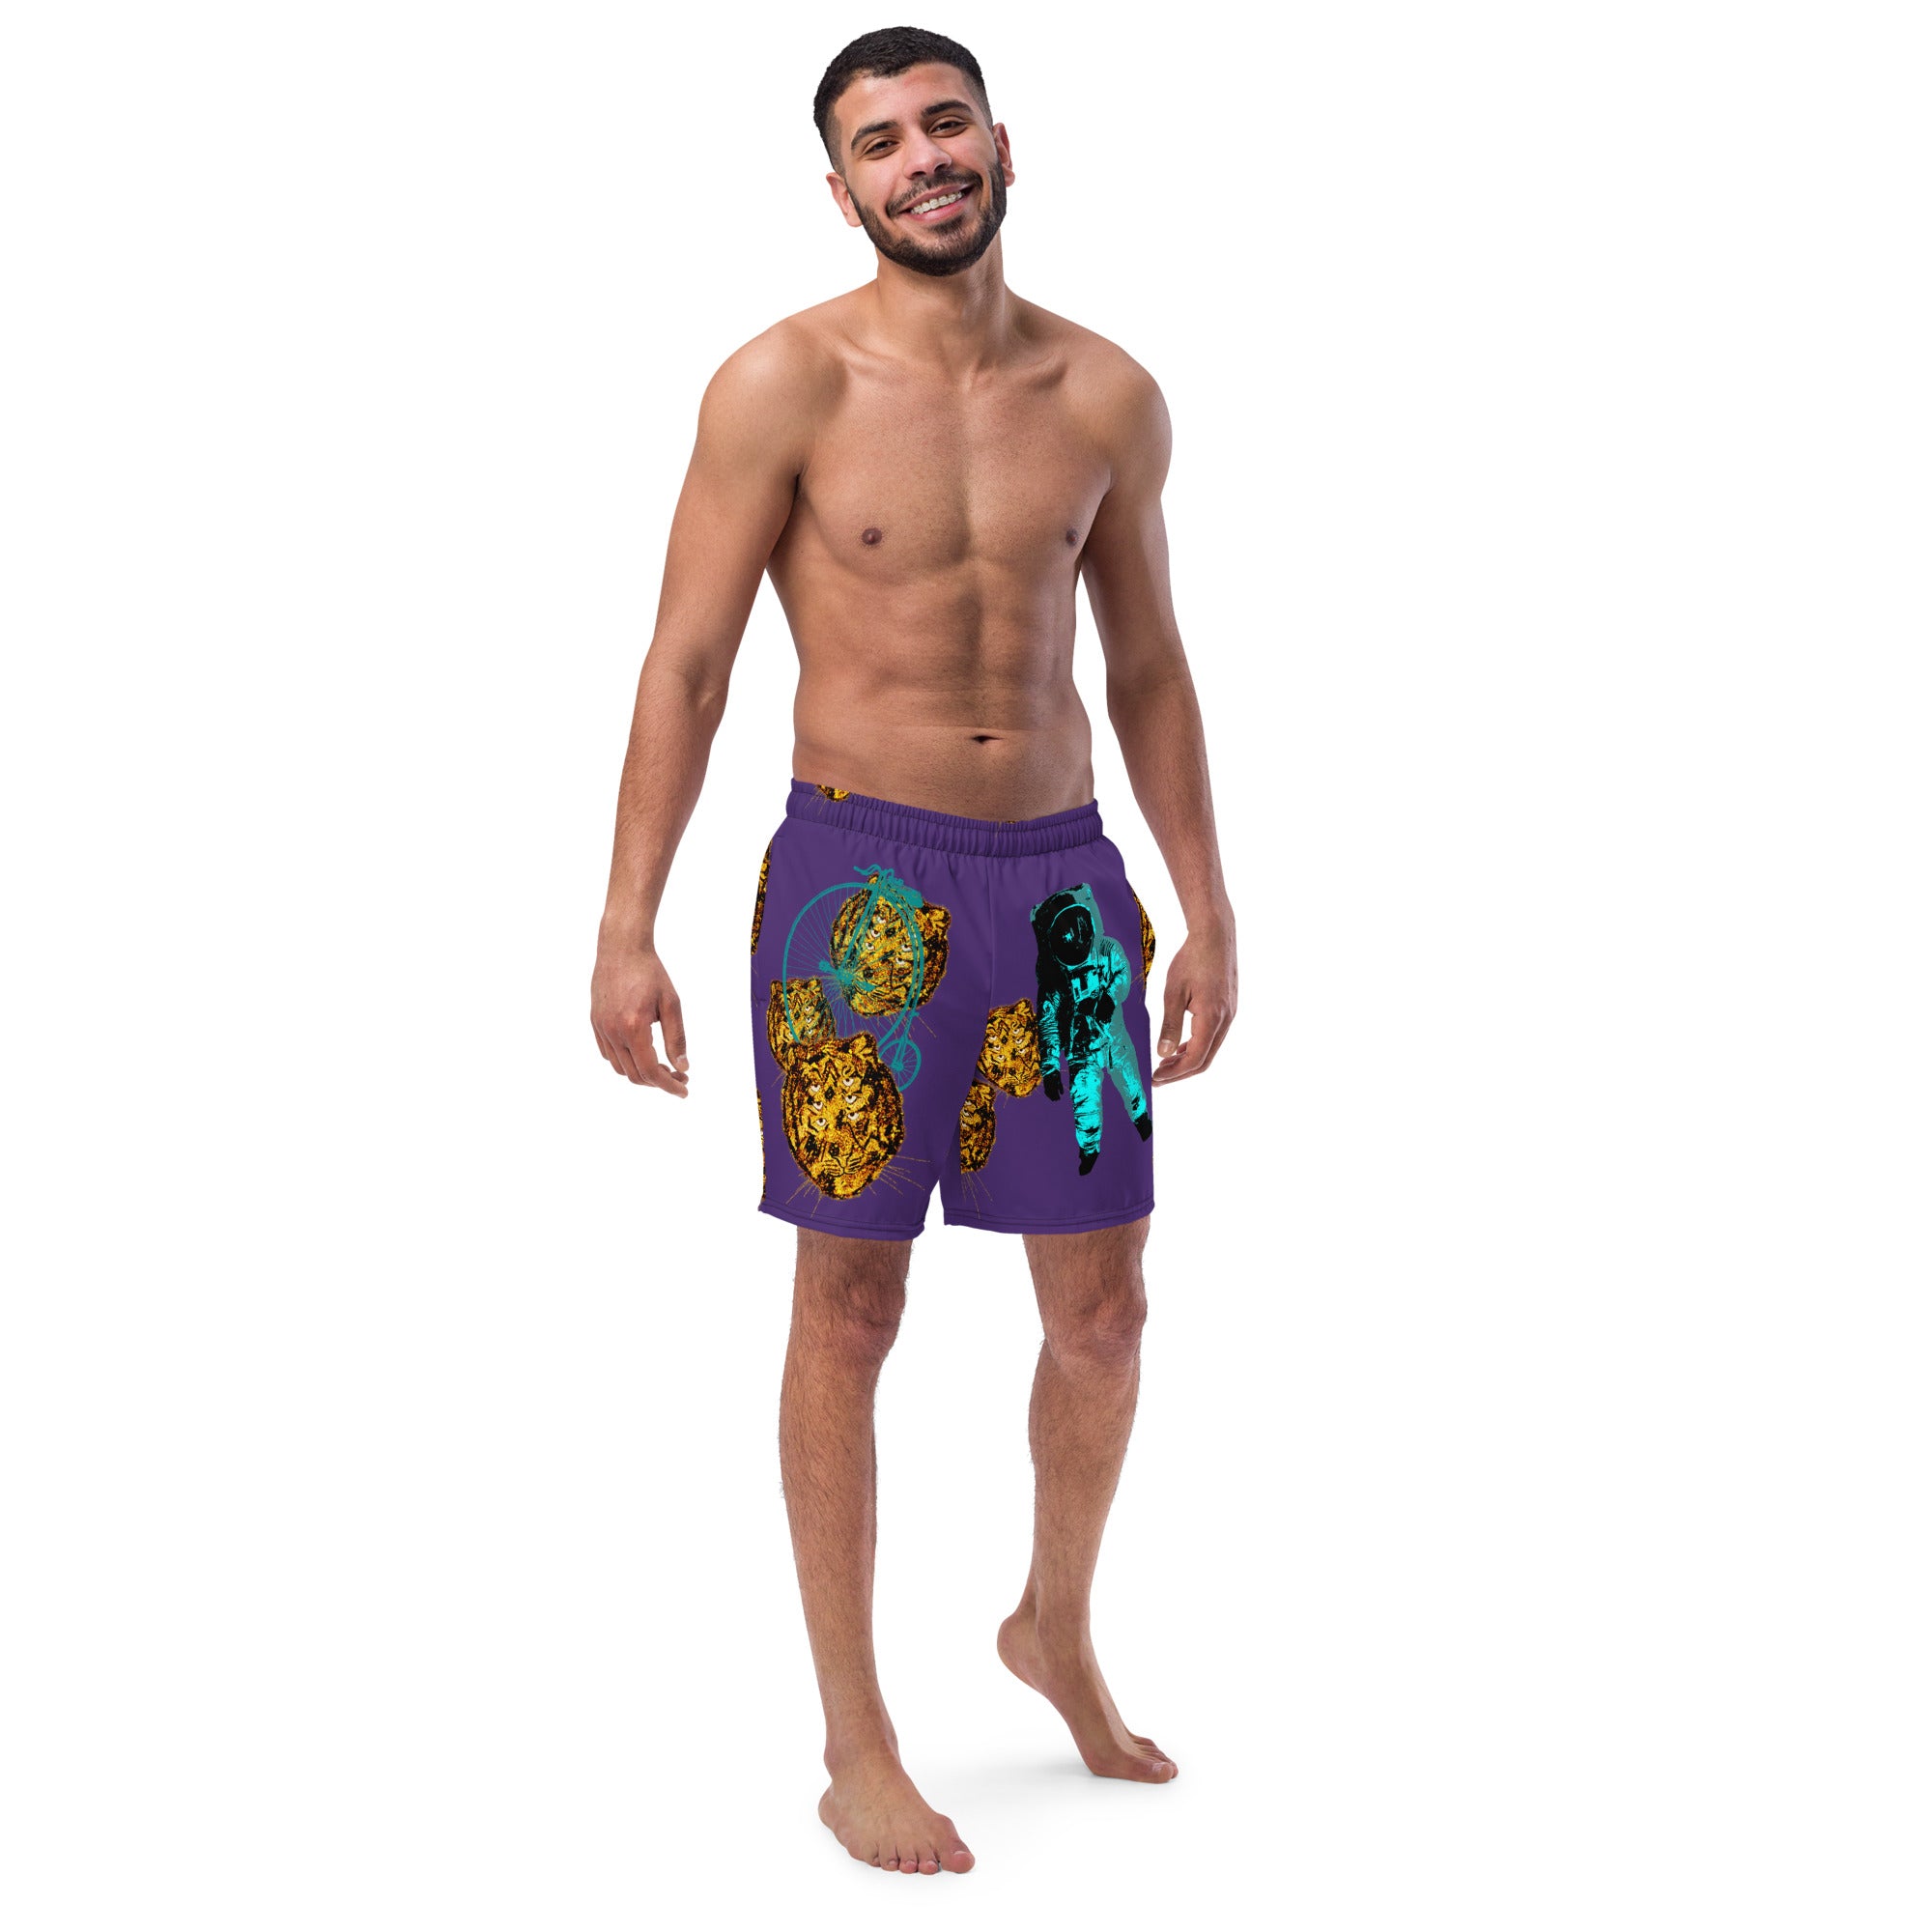 The Jeff Men's swim trunks